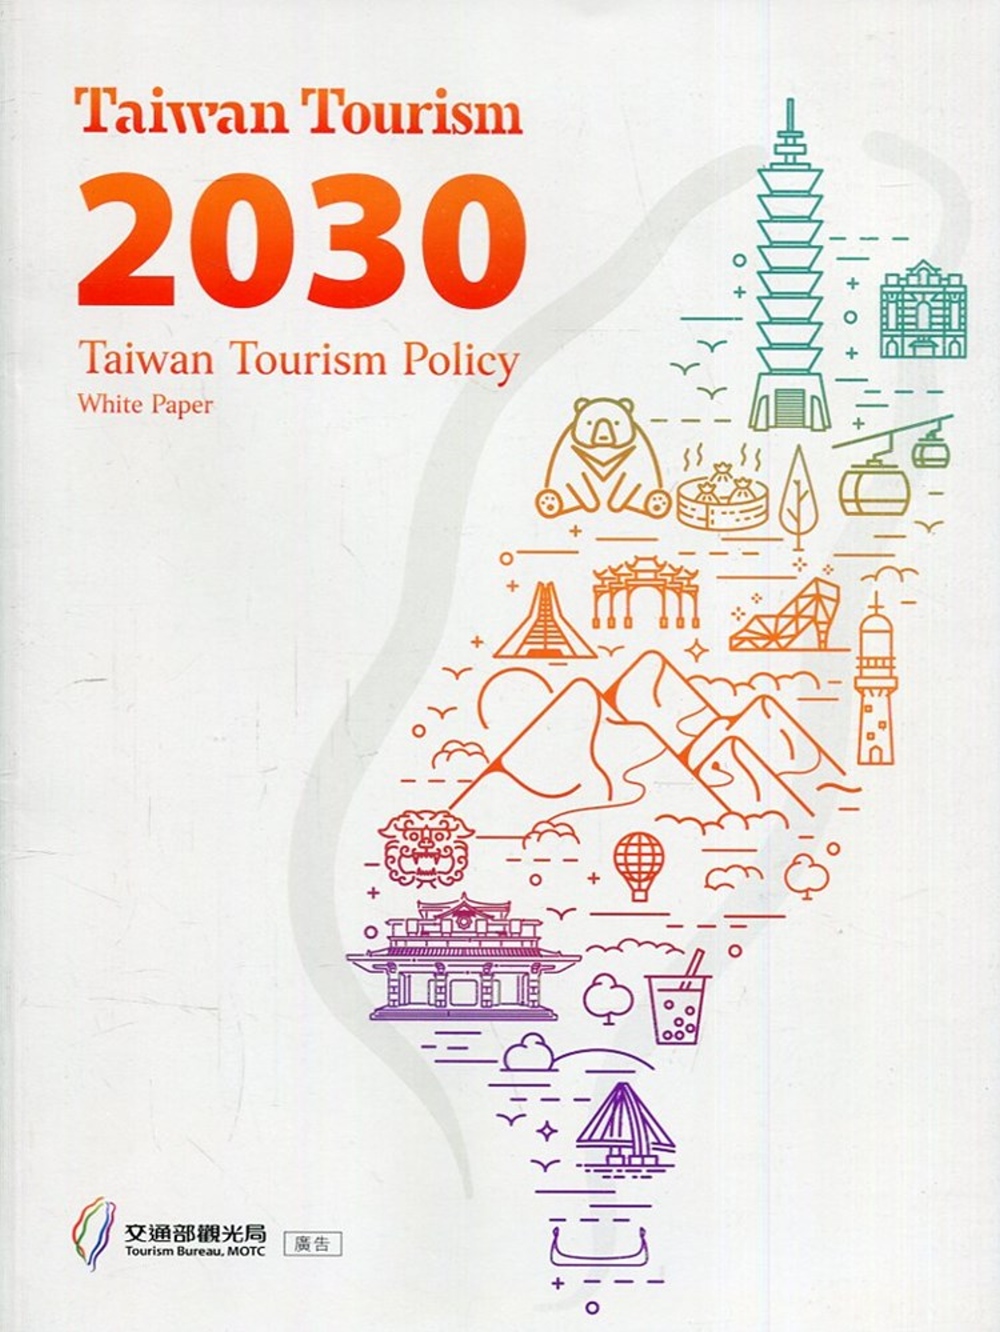 Taiwan Tourism 2030: Taiwan tourism policy white paper